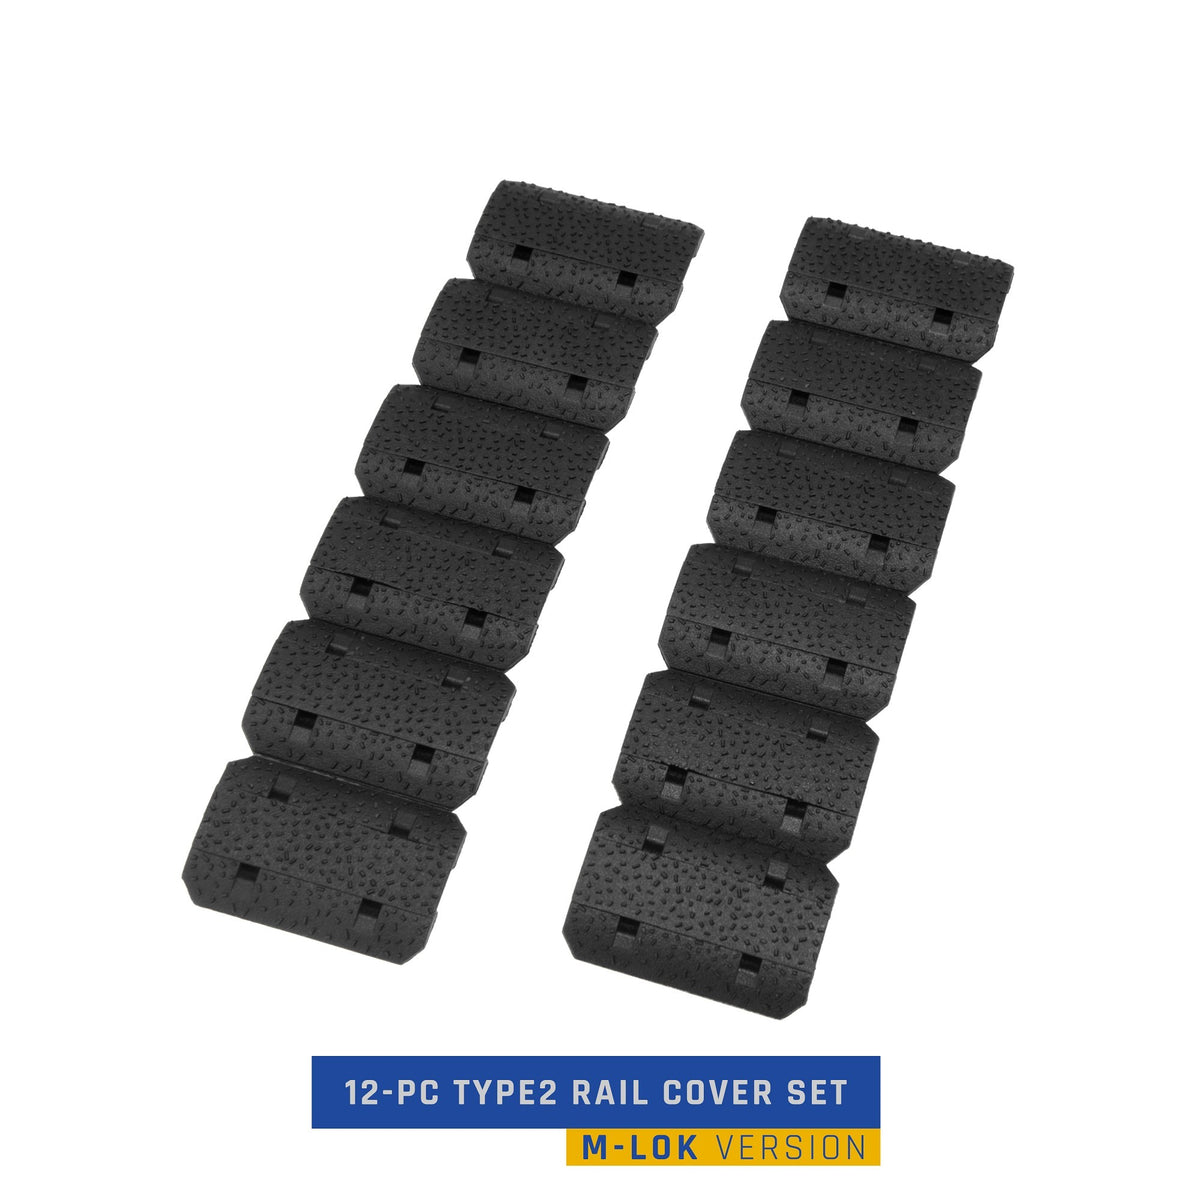 12-PC Type2 M-LOK Rail Cover Set